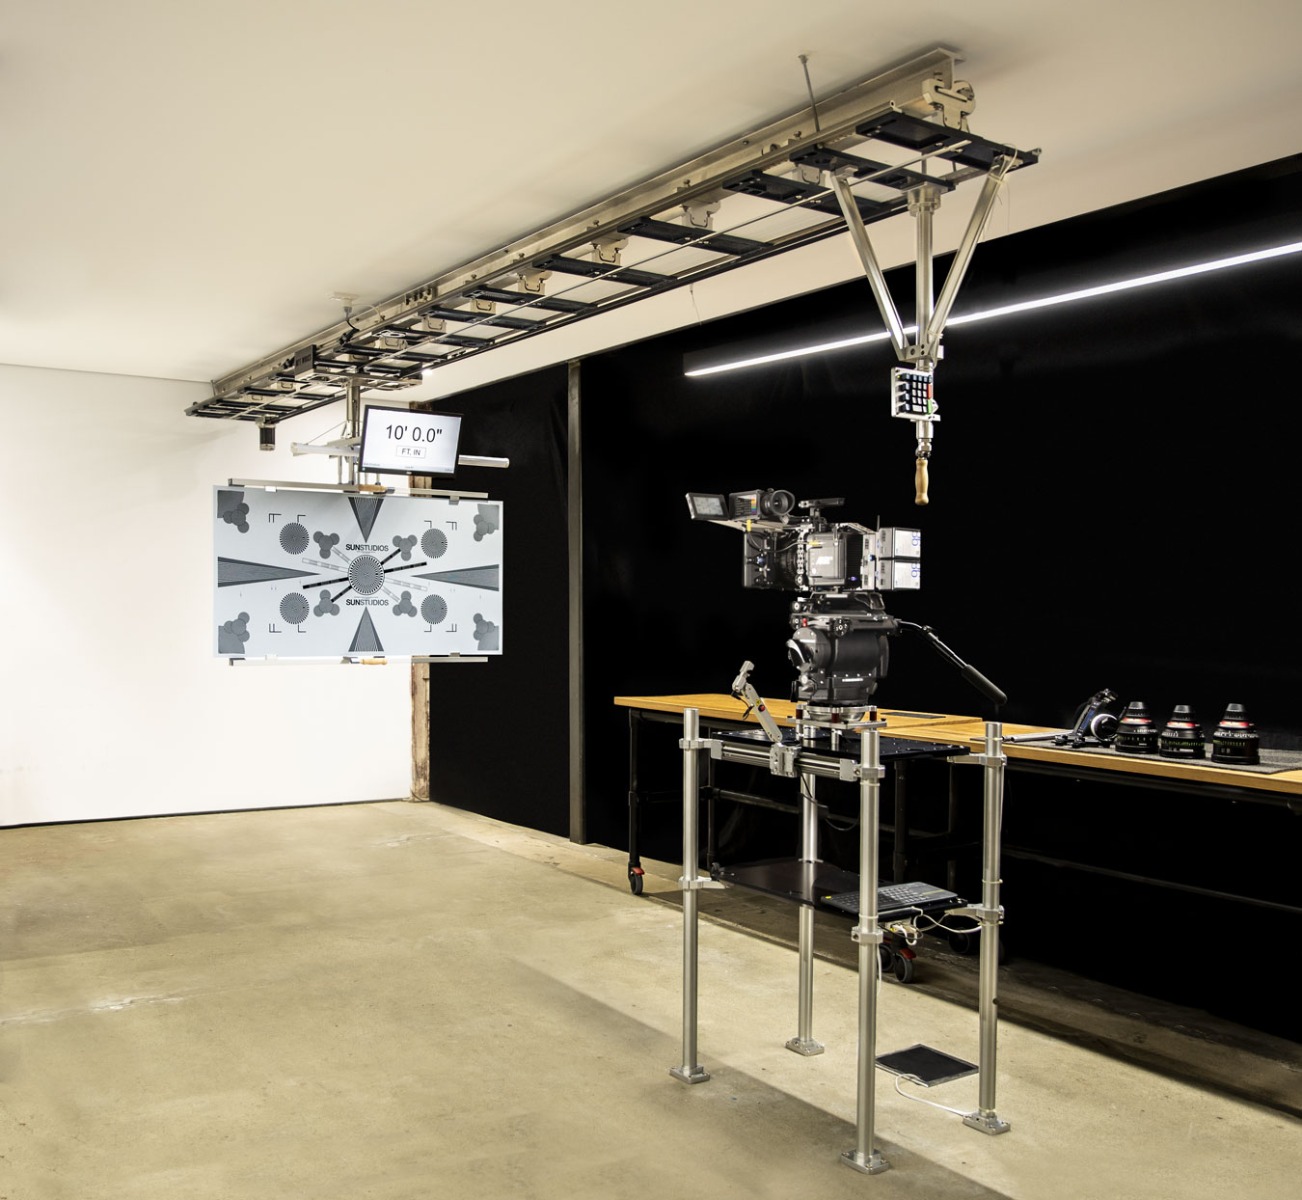 the-myt-works-opti-glide-system-installed-at-sunstudios-sydney